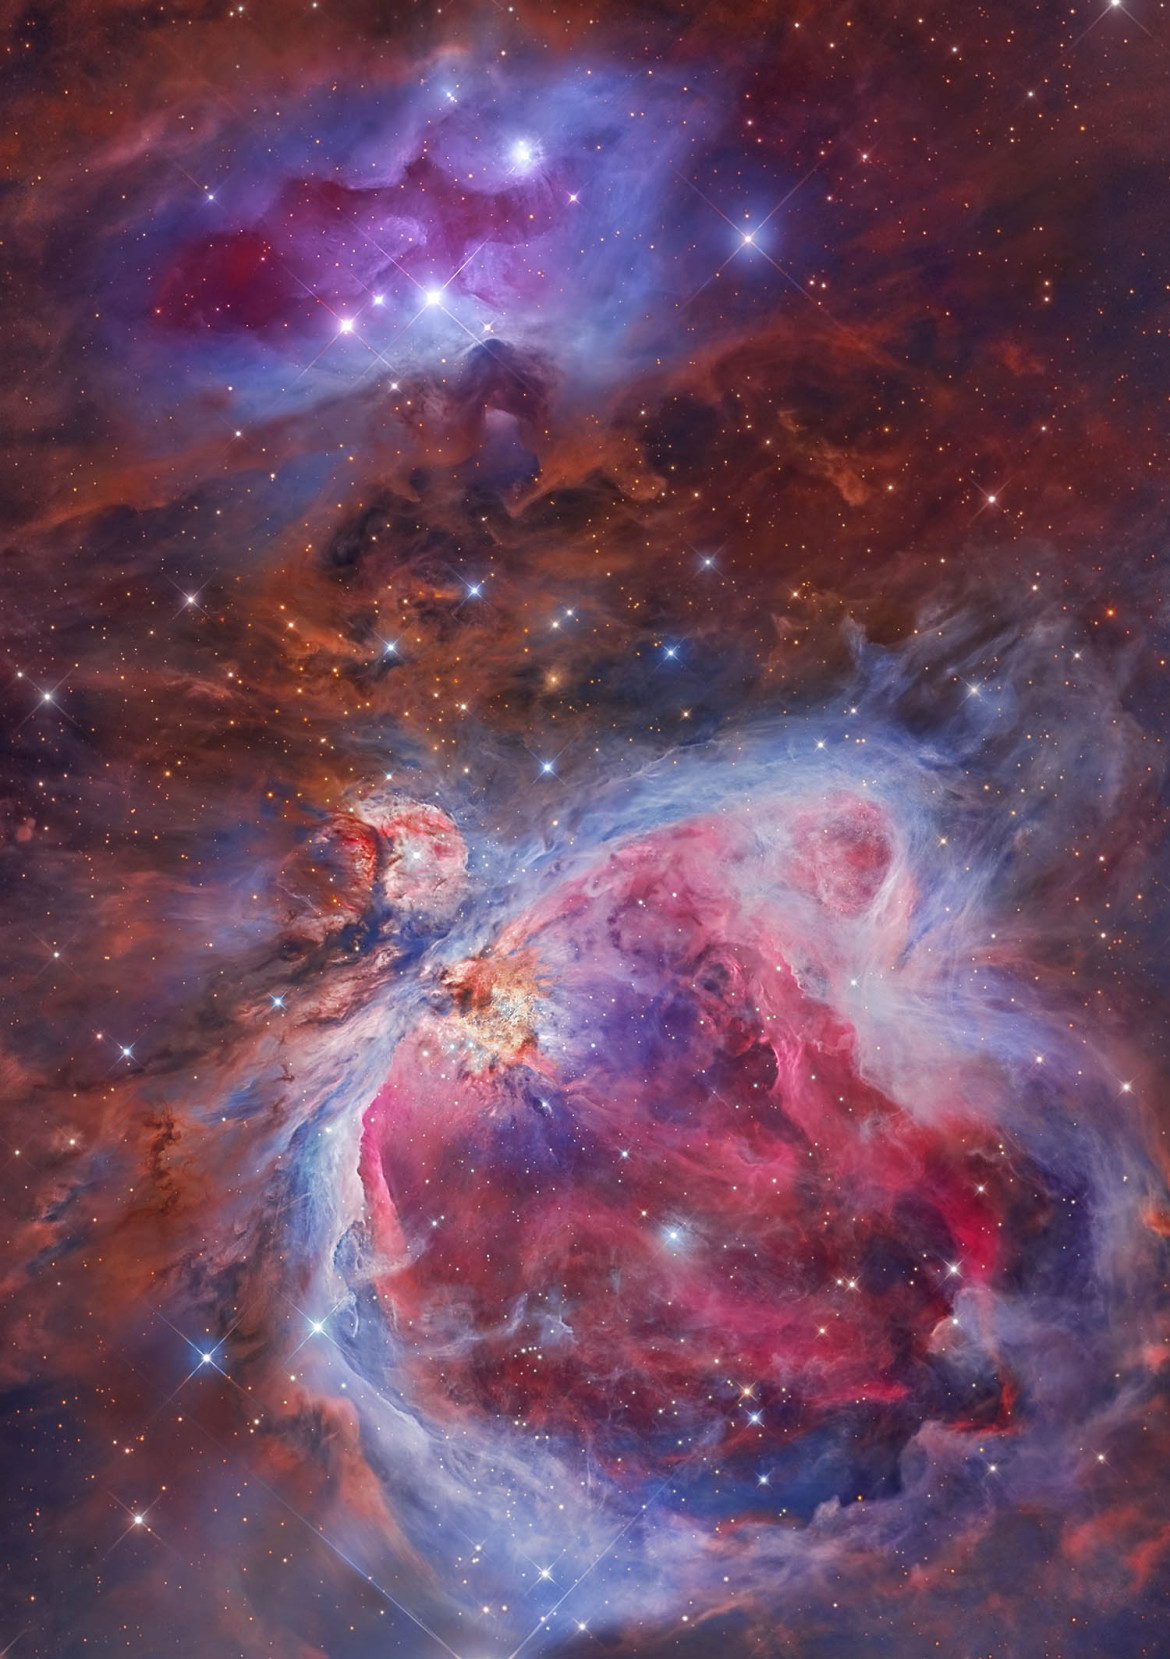 fot. Miguel Angel, Garcia Borella, Lluis Romero Ventura, "Mosaic of Great Orion & Running Man Nebula" / Insight Investment Astronomy Photographer of the Year 2018